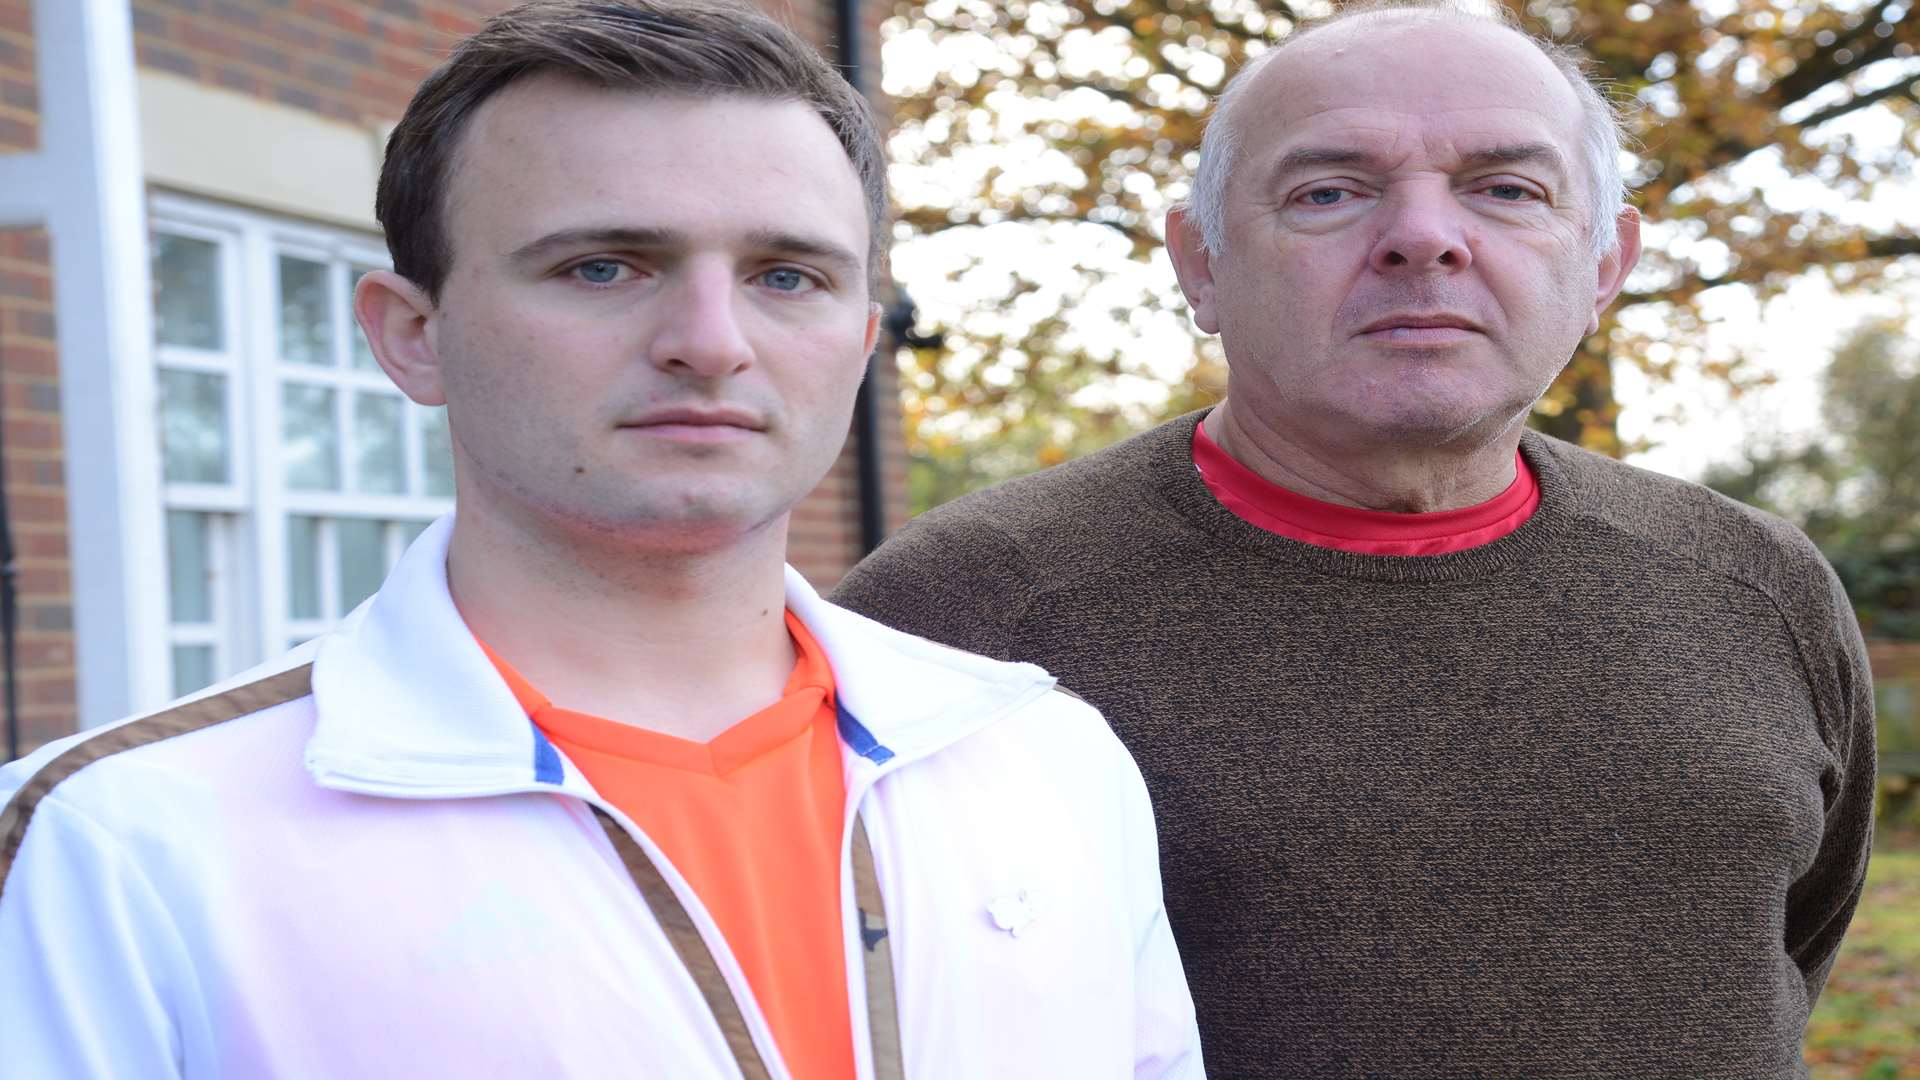 Tony Blackall and his son Aidan, who restrained a shoplifter at Sainsbury's